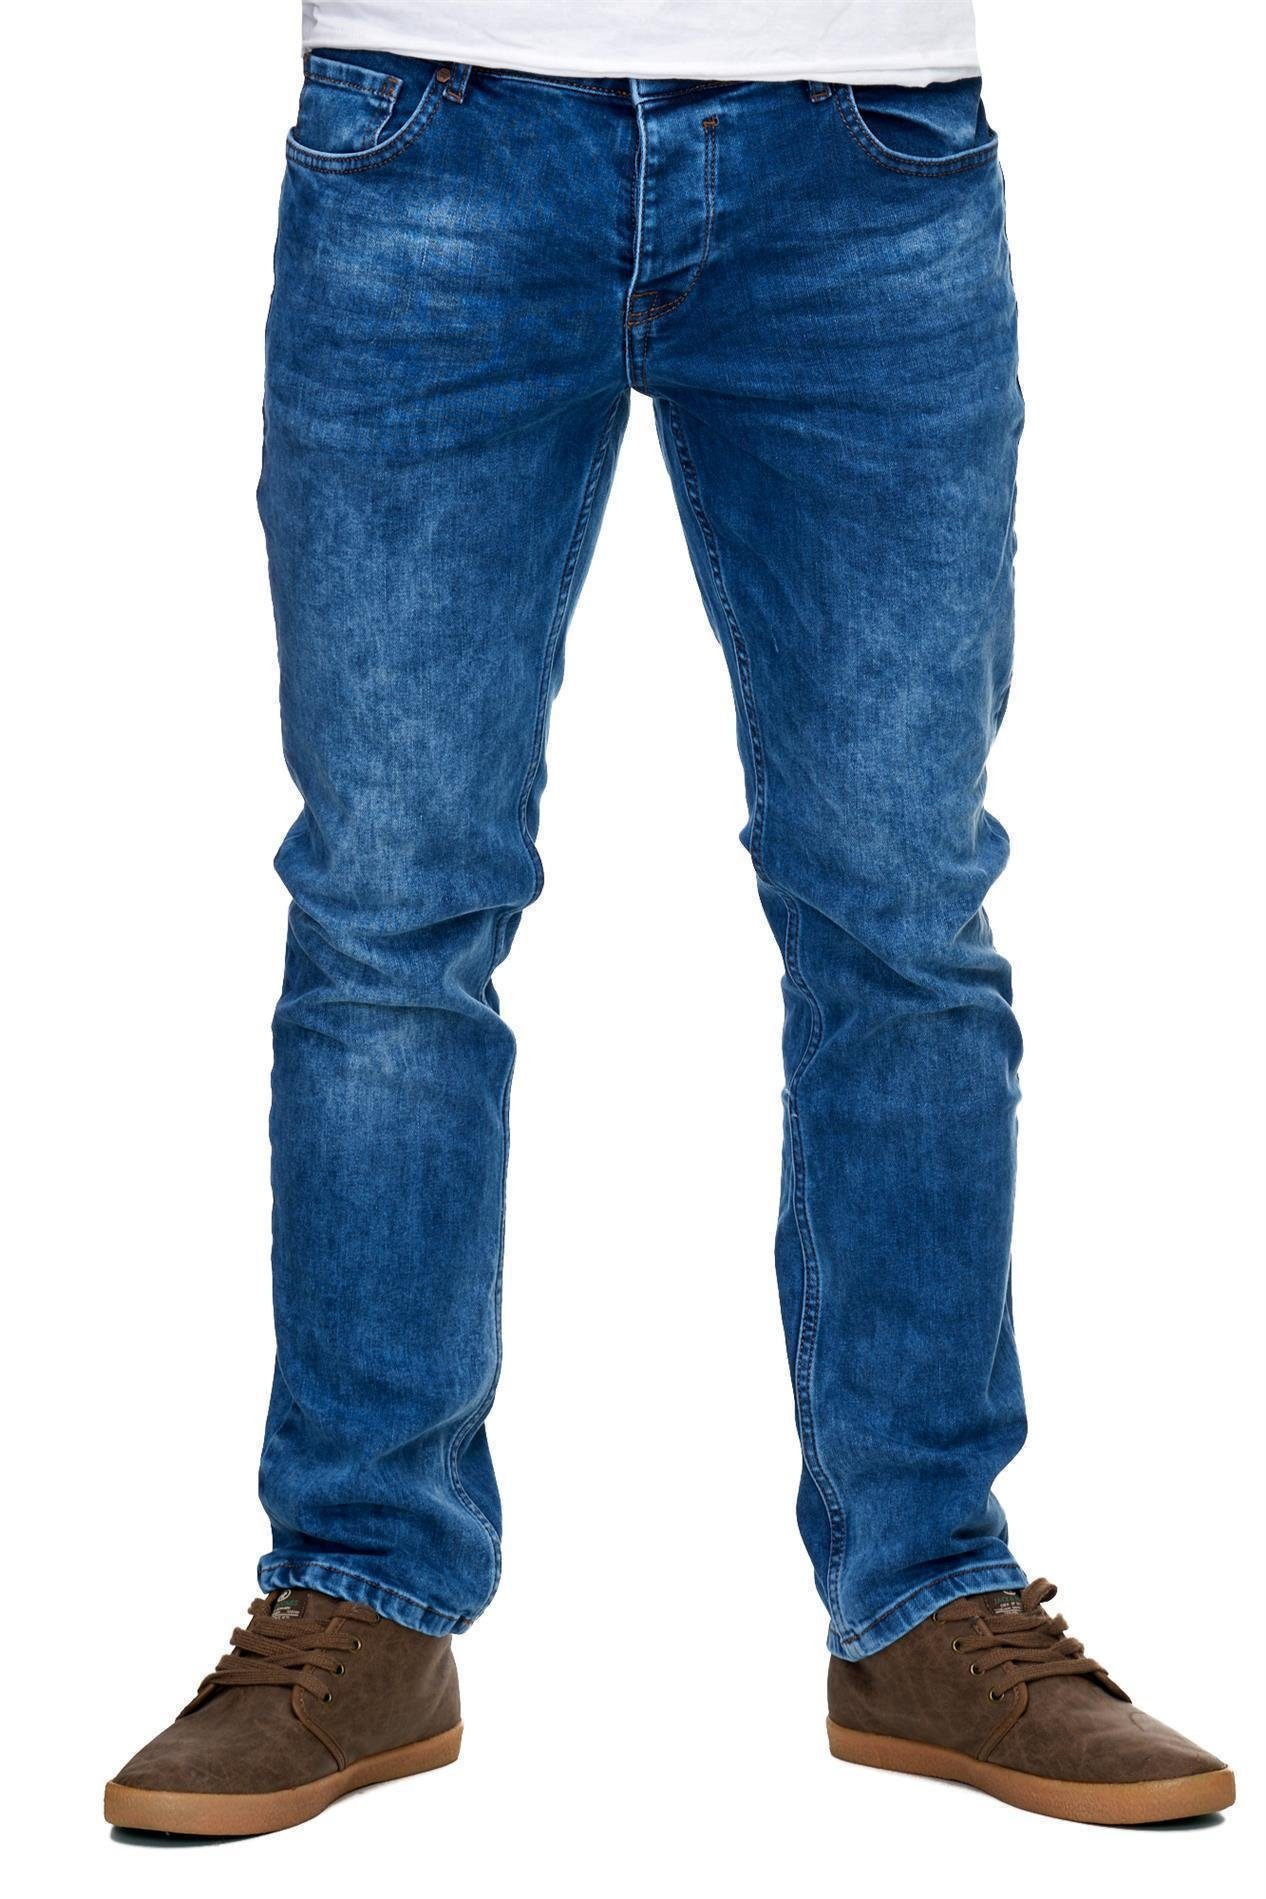 Stretch Jeans-Herren Slim blau Jeans-Hose Stretch-Denim Fit Reslad Slim Style Basic Jeans-Hose Fit Stretch-Jeans Reslad